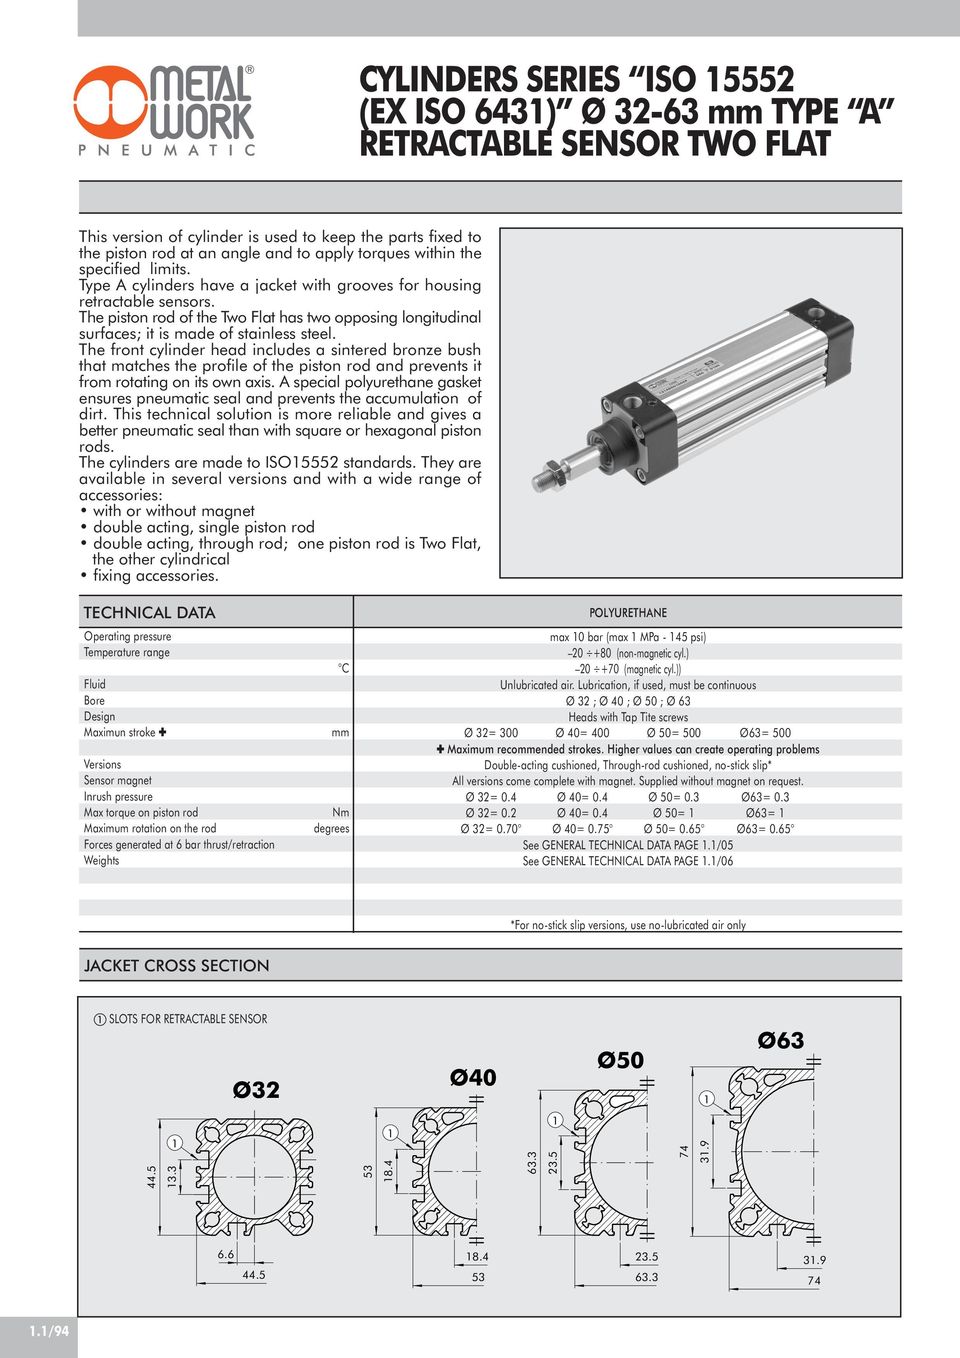 Crosa-cylinders Series ISO 6431 